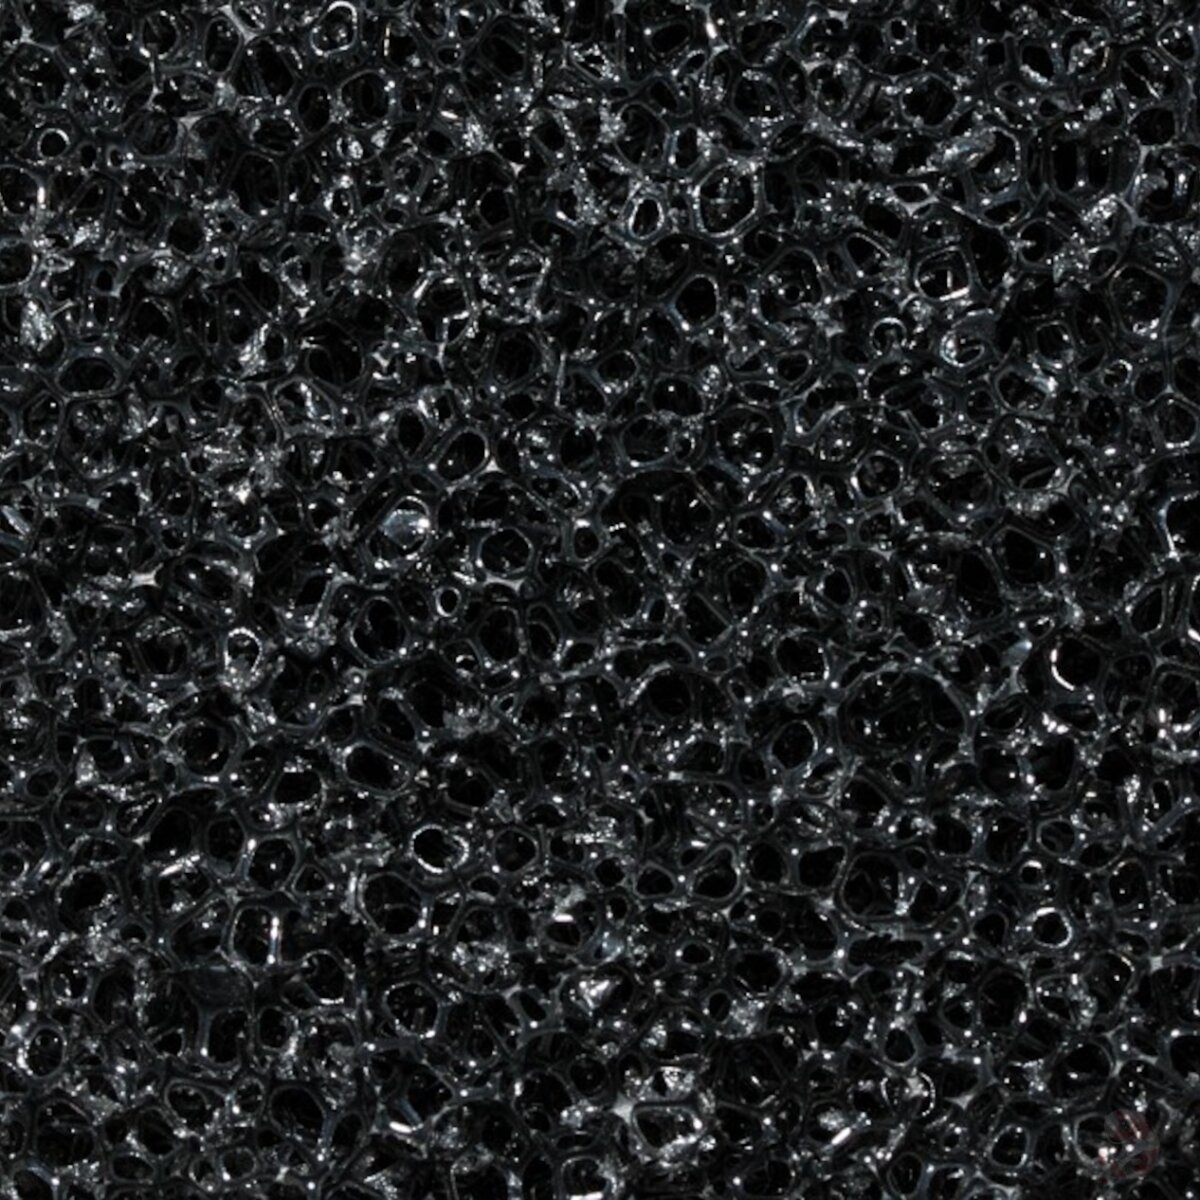 Filtermatte schwarz, 50 x 50 x 3 cm, 20 ppi